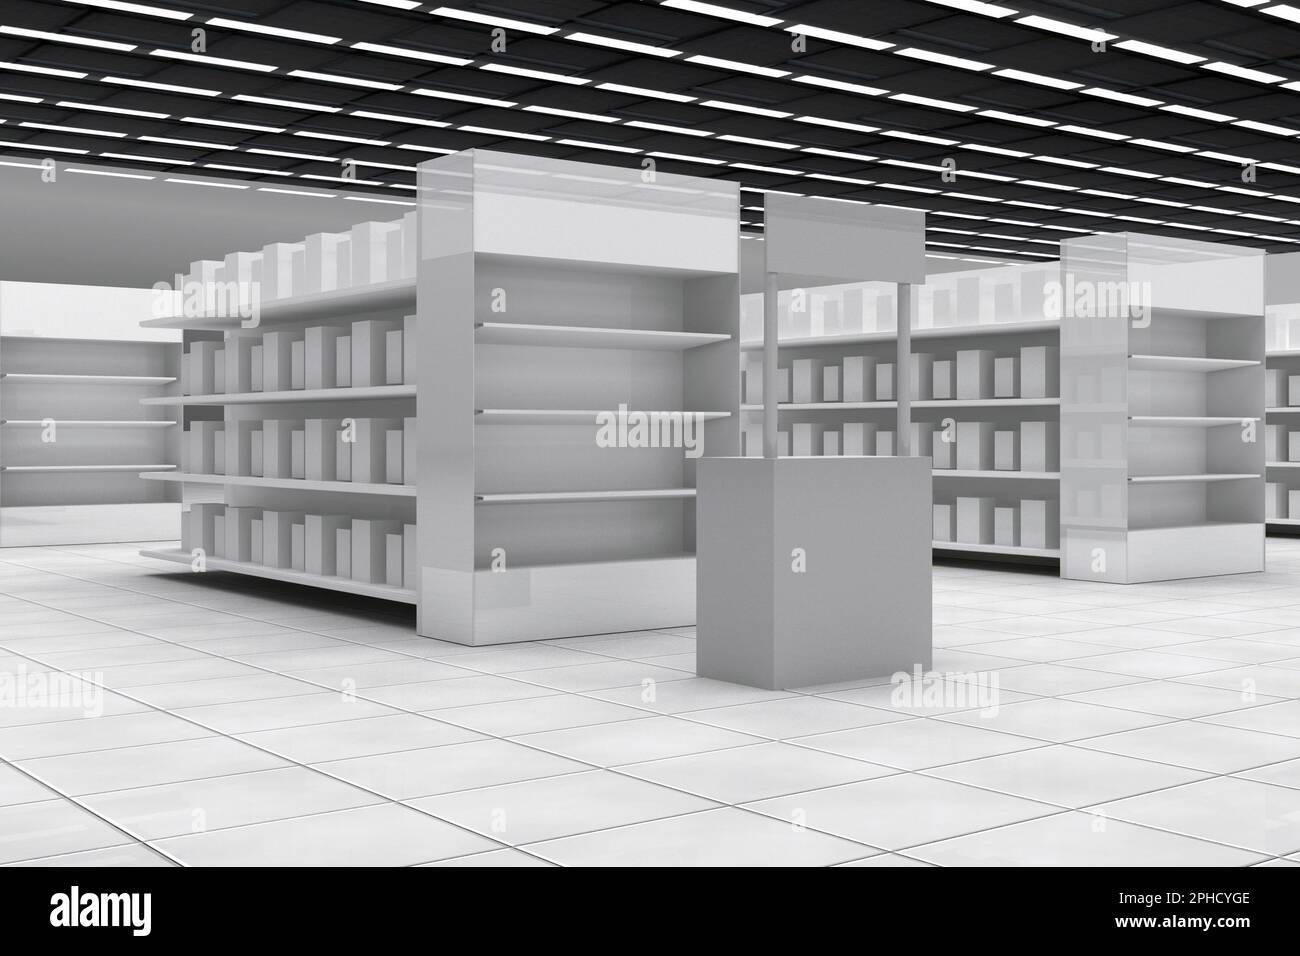 https://c8.alamy.com/comp/2PHCYGE/super-market-aisle-with-gondola-and-promotion-stand-with-shelf-3d-image-rendering-illustration-2PHCYGE.jpg